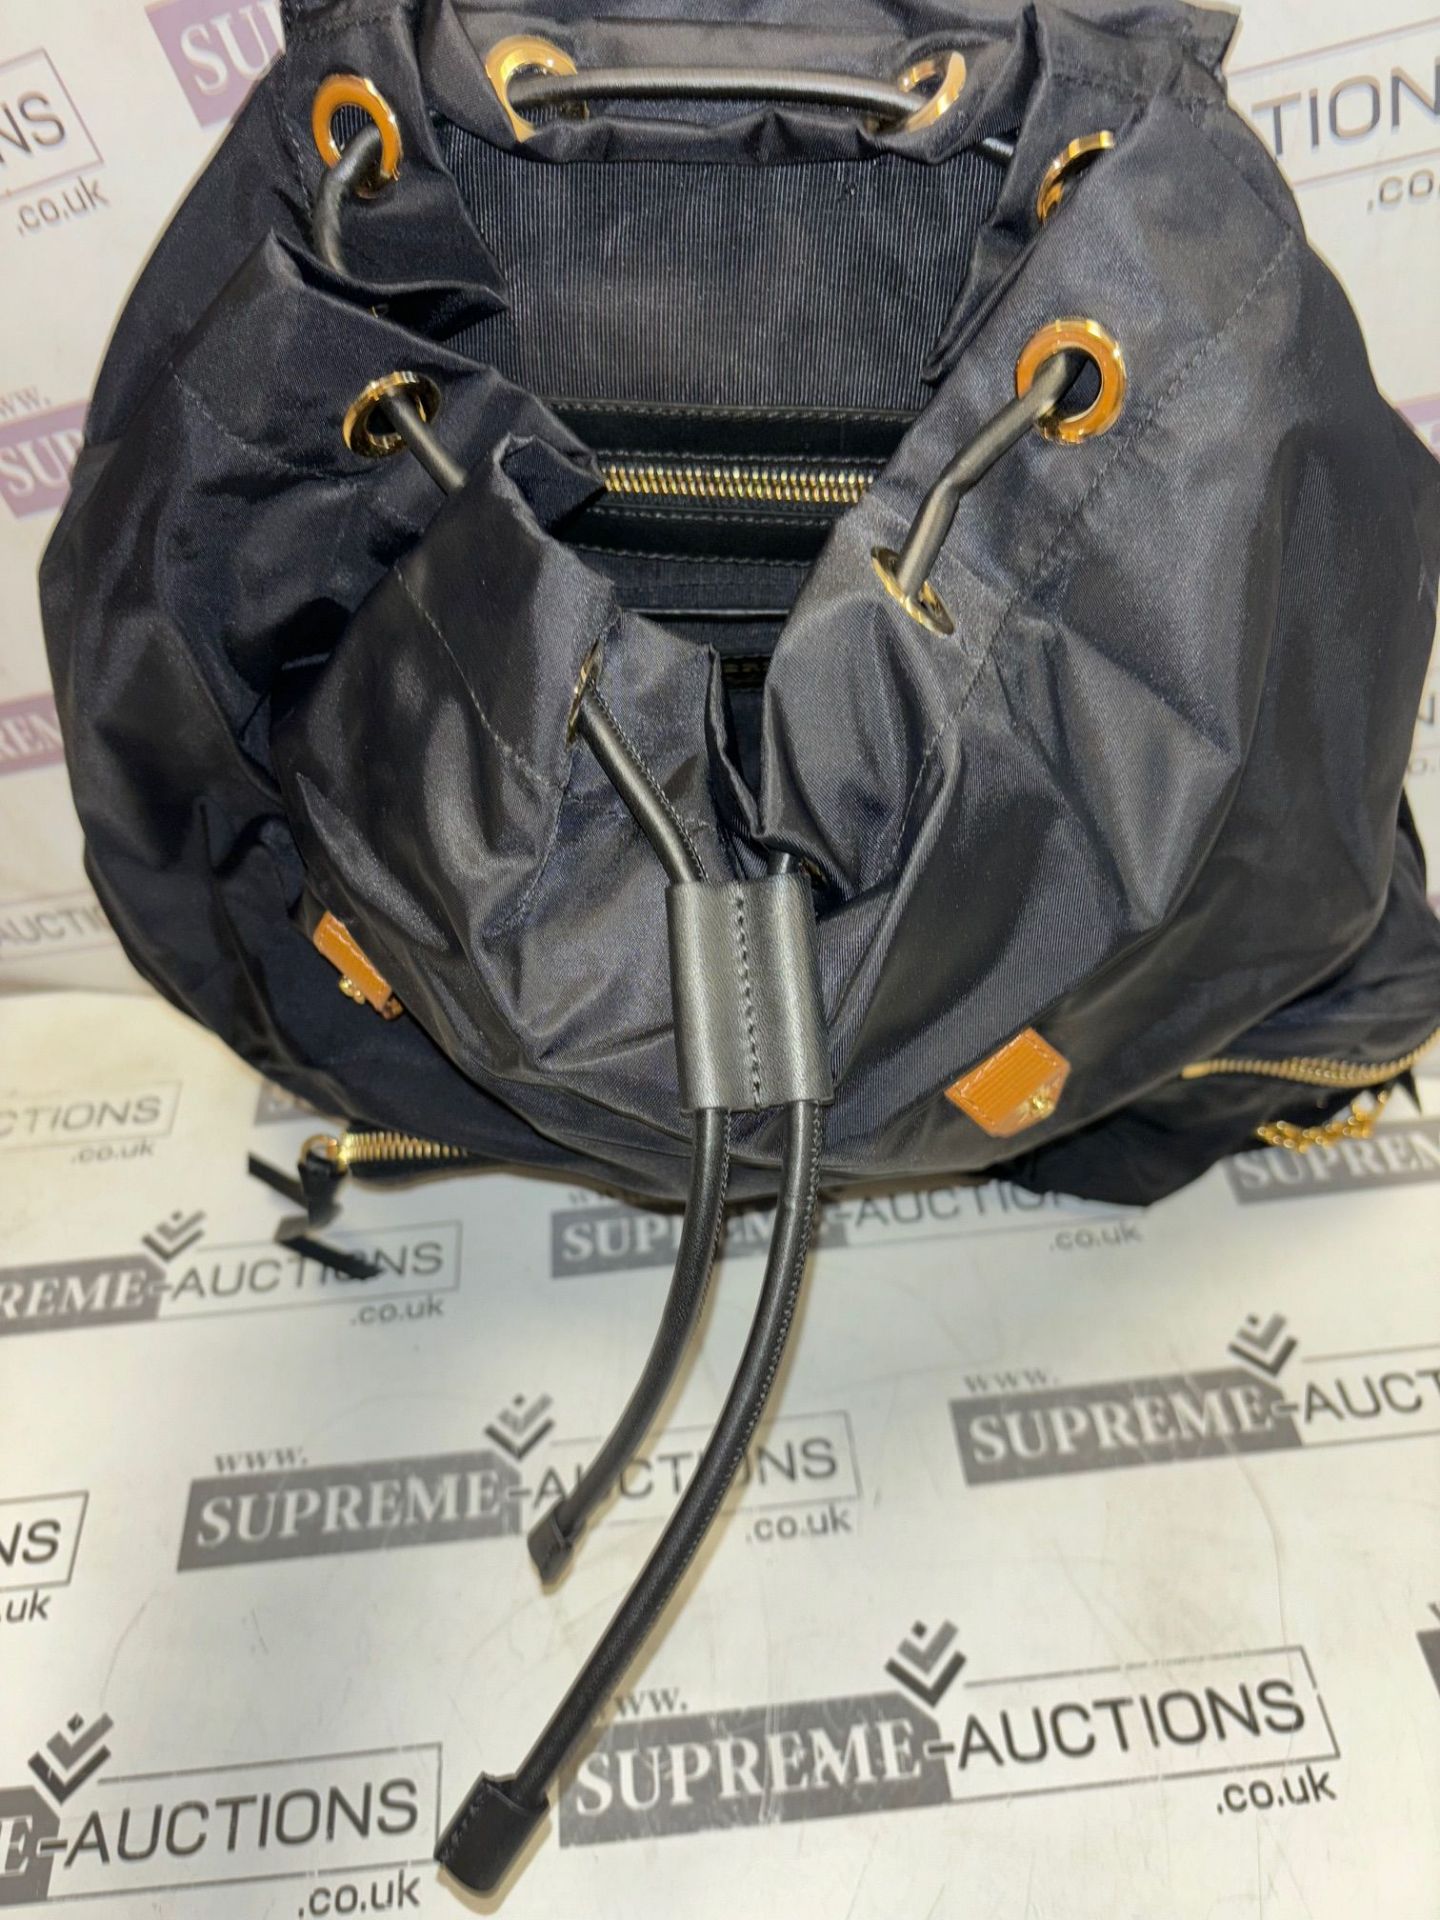 Genuine Burberry Nylon Medium Rucksack Backpack Black, personalised SBDC. Used for training. - Image 6 of 6